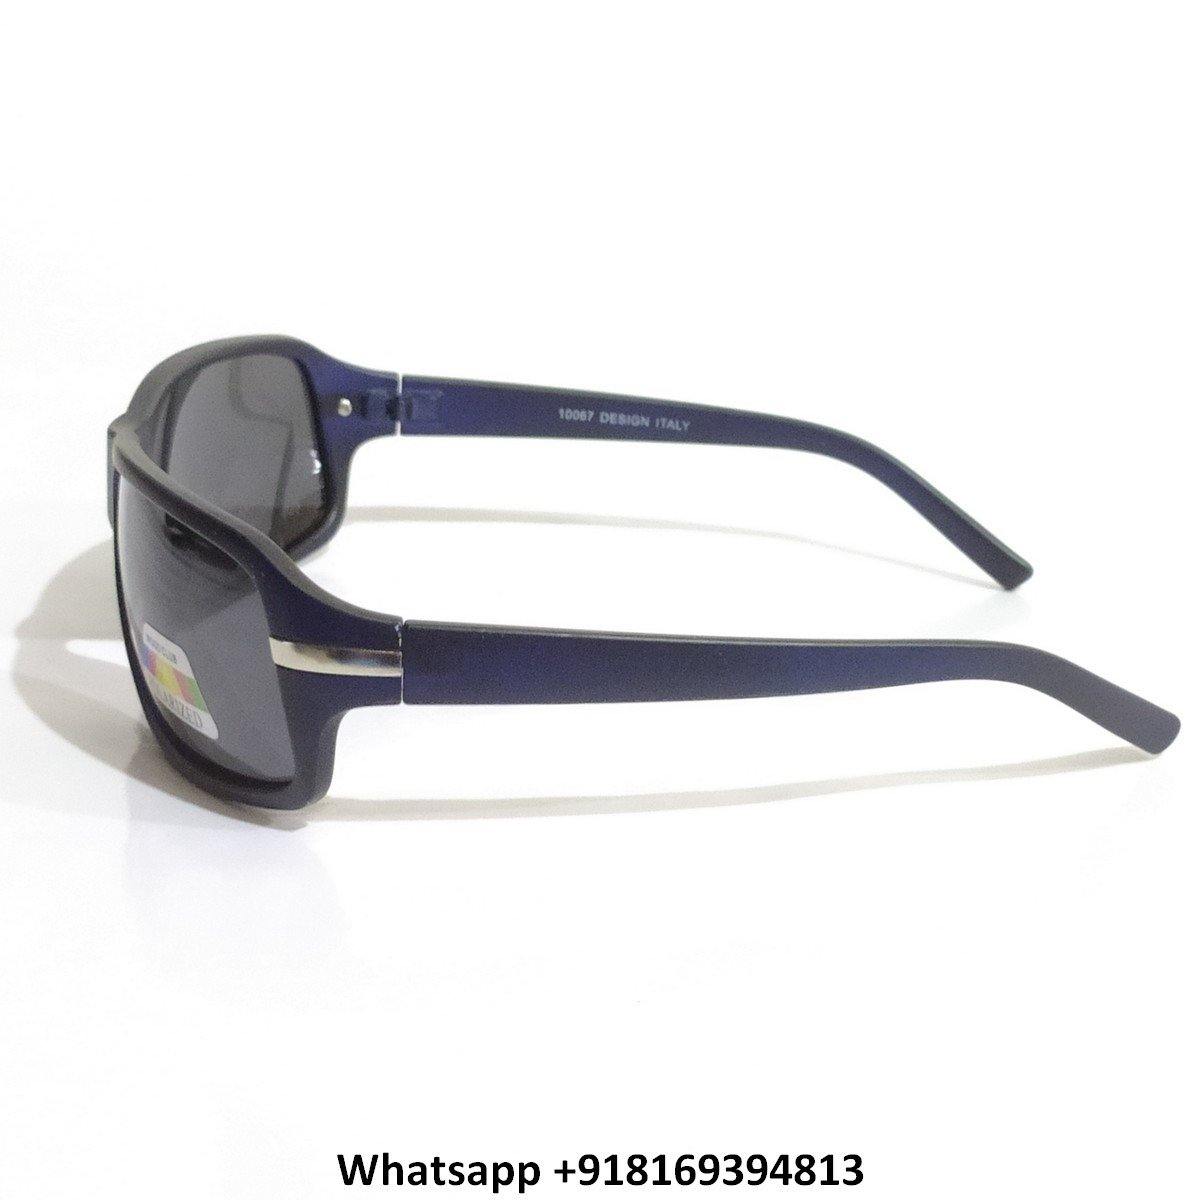 Wraparound Sports Polarized Sunglasses for Men and Women 10067BL – Glasses  India Online